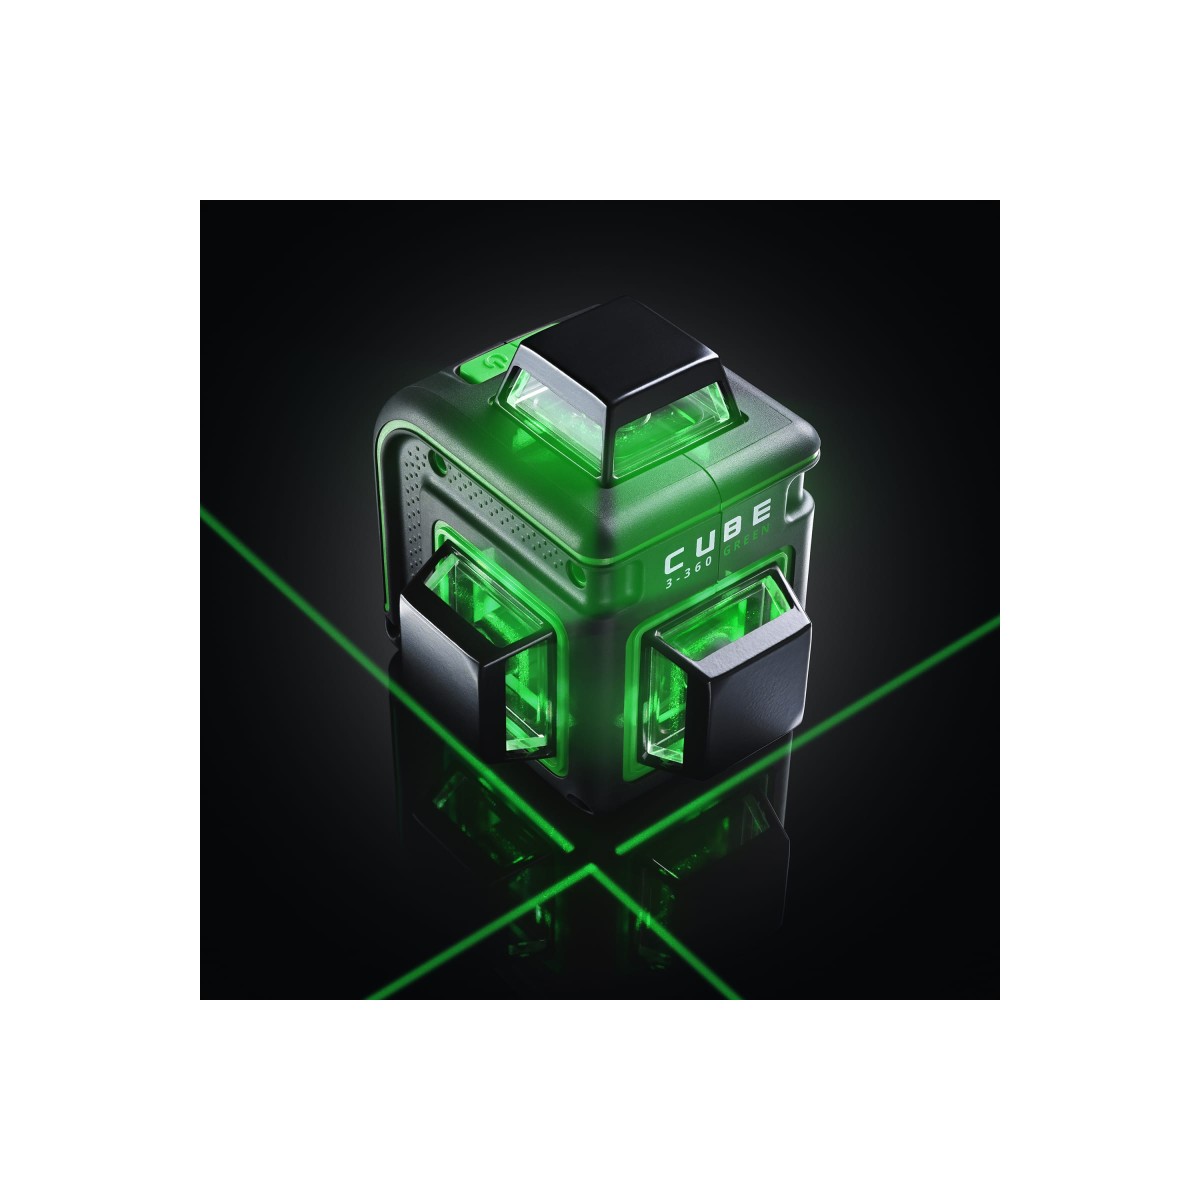 Cube 360 basic edition. Ada Cube 3-360 Green. Лазерный уровень ada Cube 3-360 Basic Edition. Ada Cube 2-360 Green. Лазерный уровень Cube 3 сломанный.